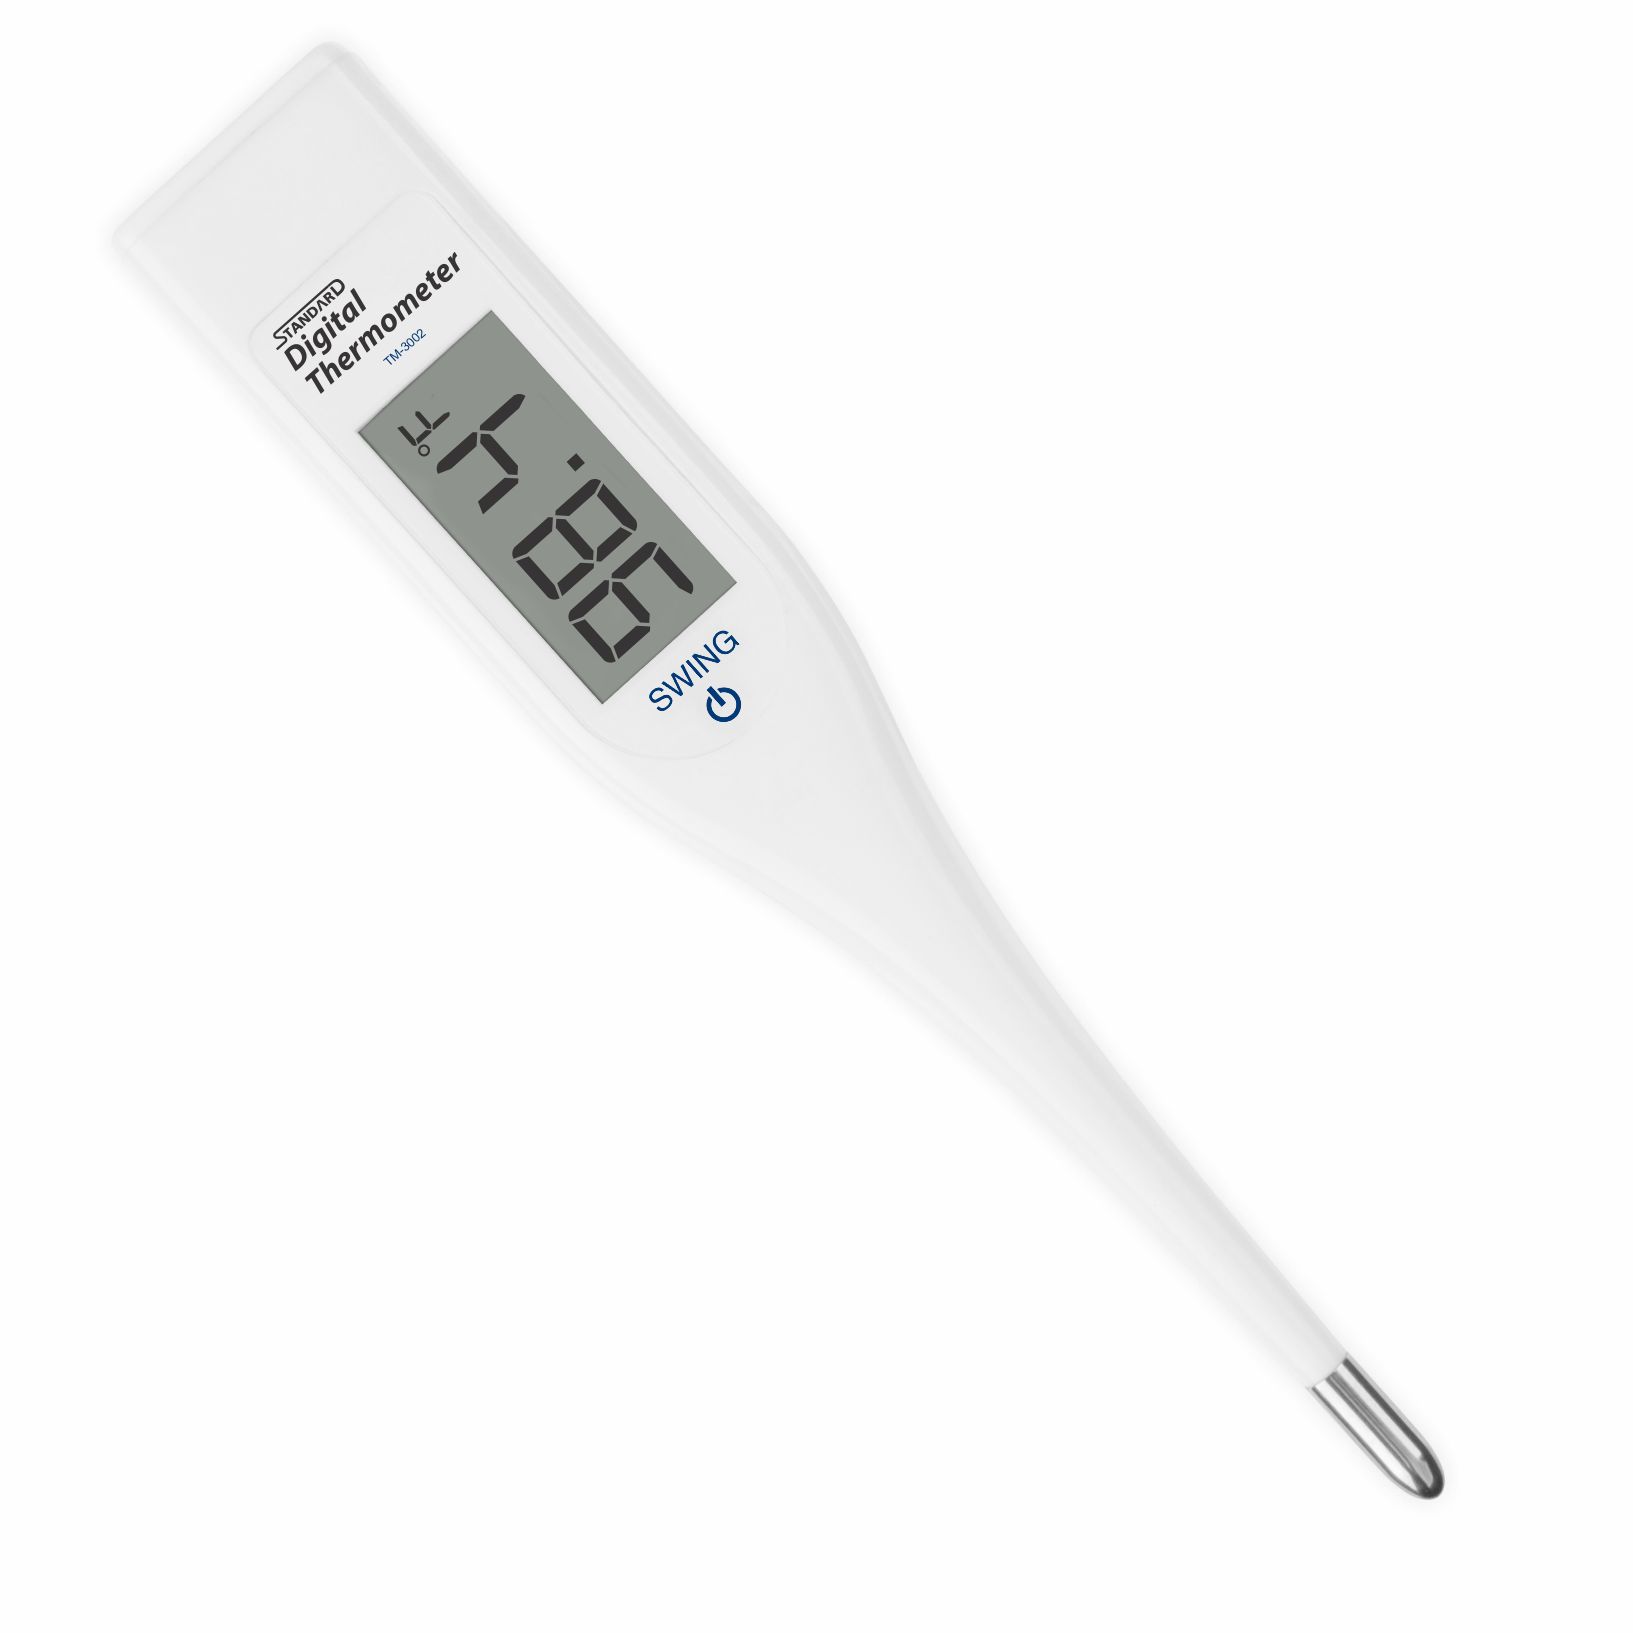 STANDARD Digital Thermometer